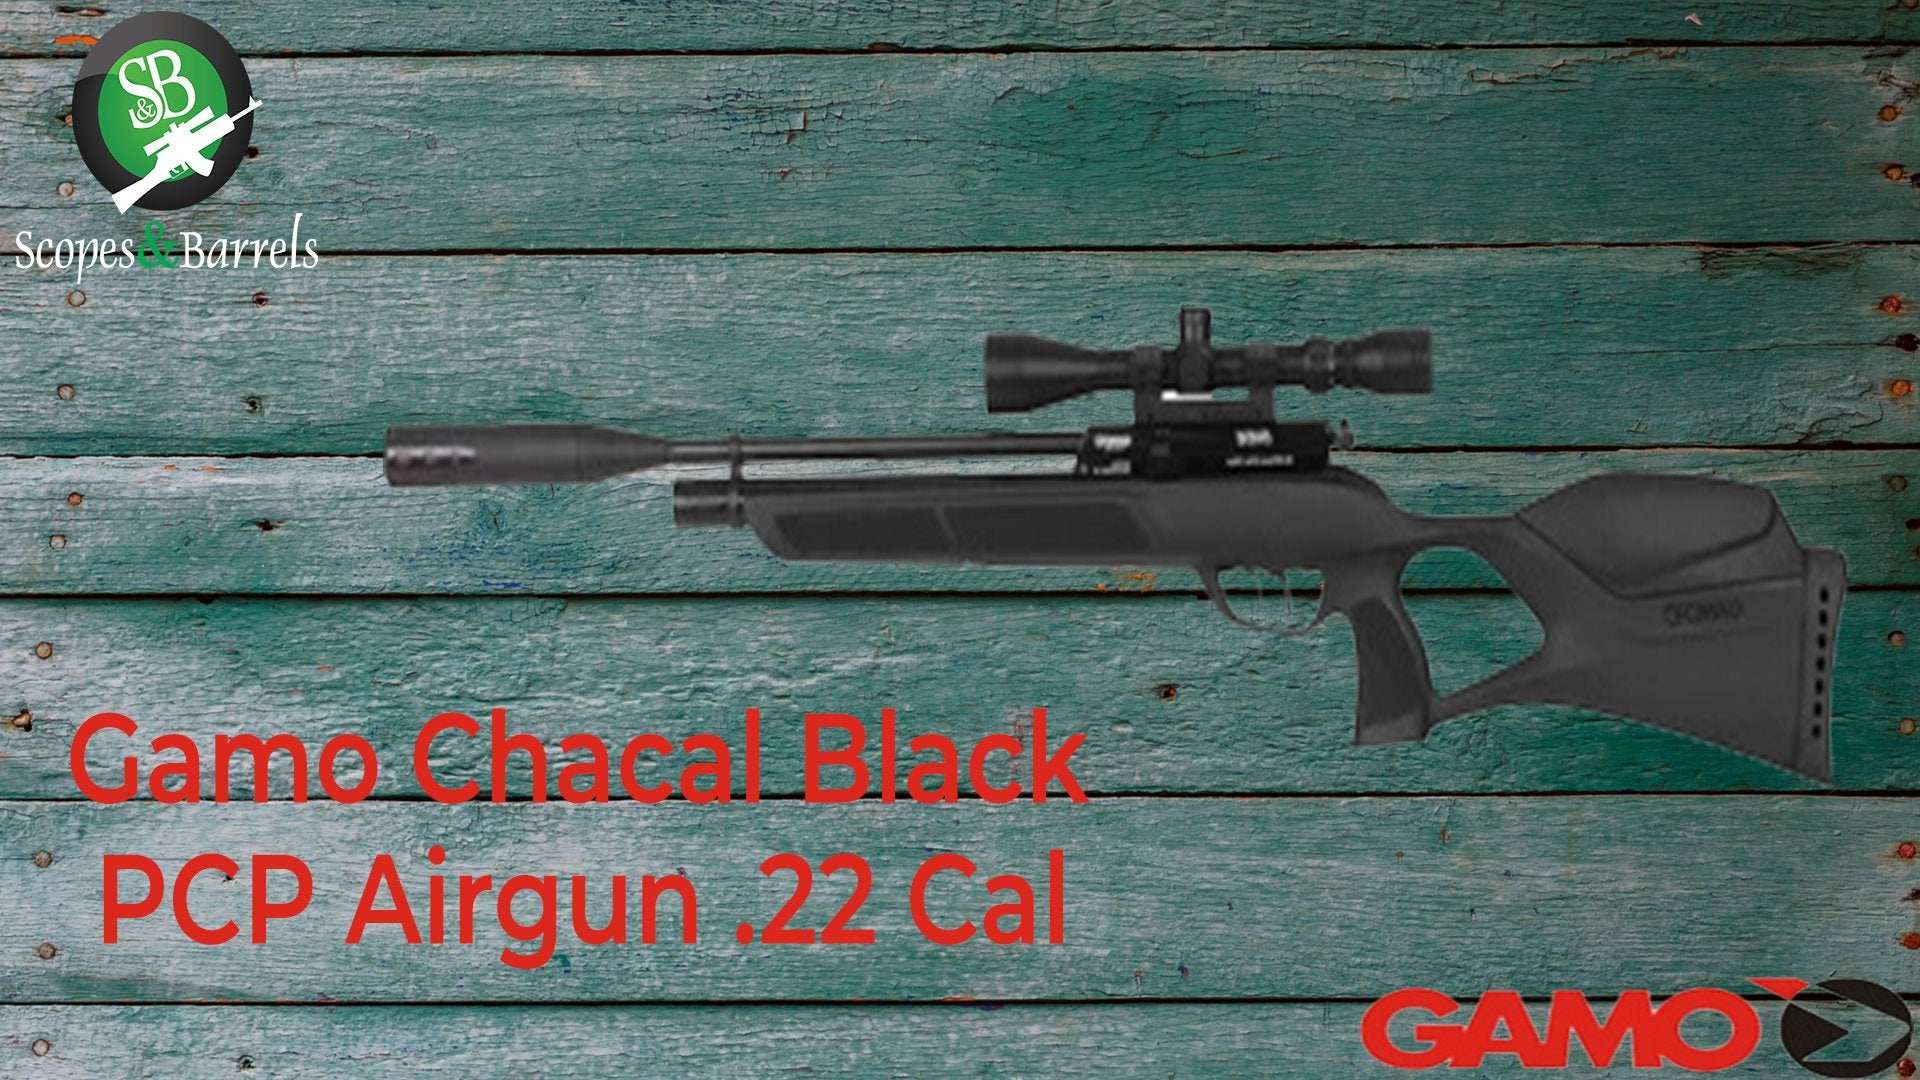 Blog: Gamo Chacal Black PCP Airgun .22 Cal - Scopes and Barrels